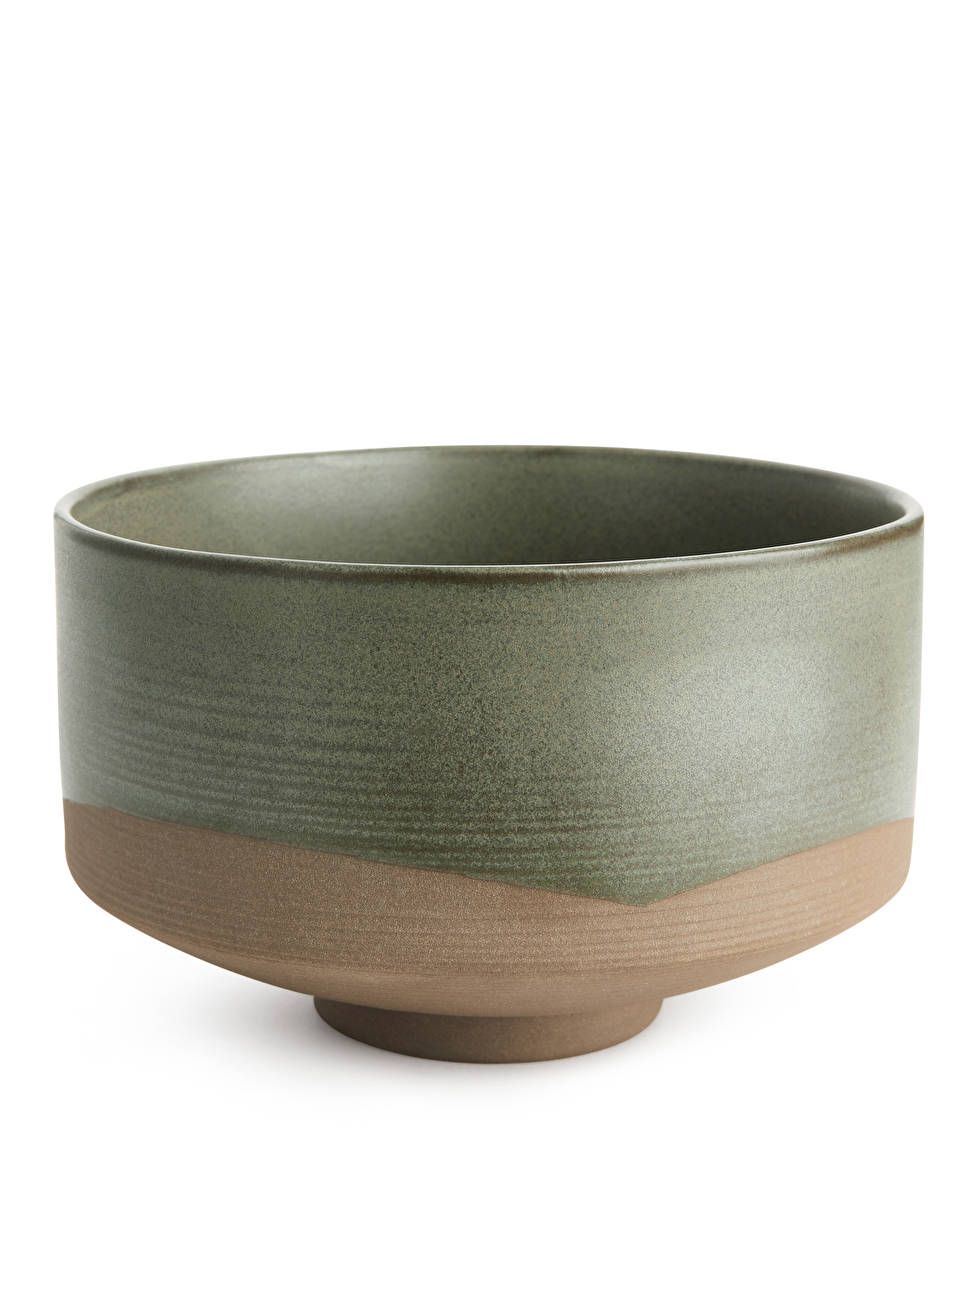 Serax Merci Bowl No. 1, 15 cm | ARKET (US&UK)